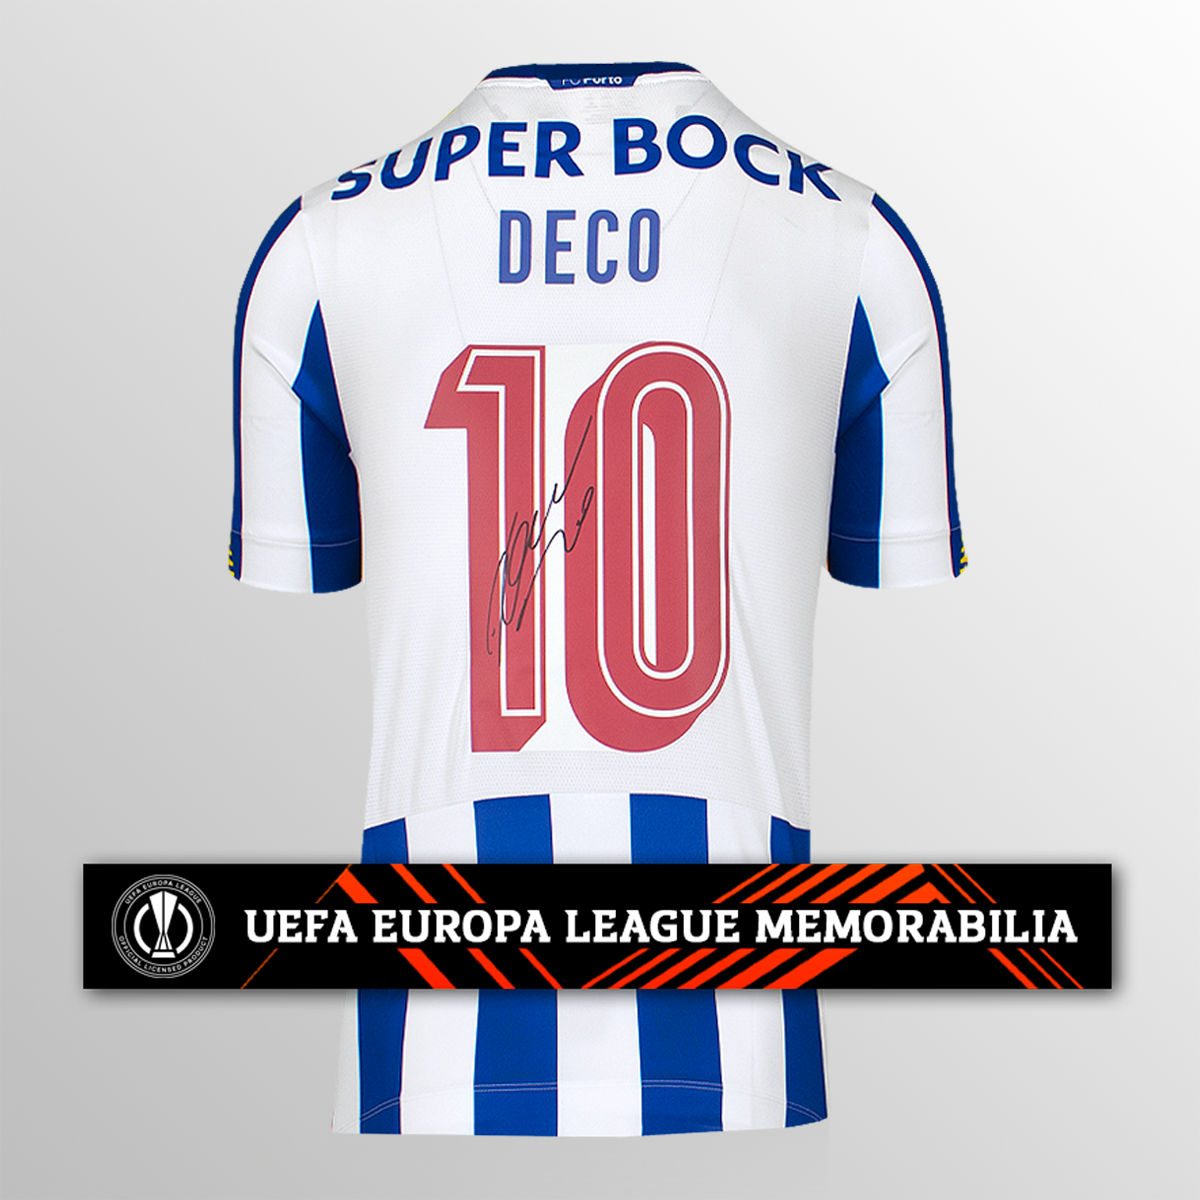 Deco, offizielles UEFA Europa League-Rückensigniertes, modernes Heimtrikot des FC Porto